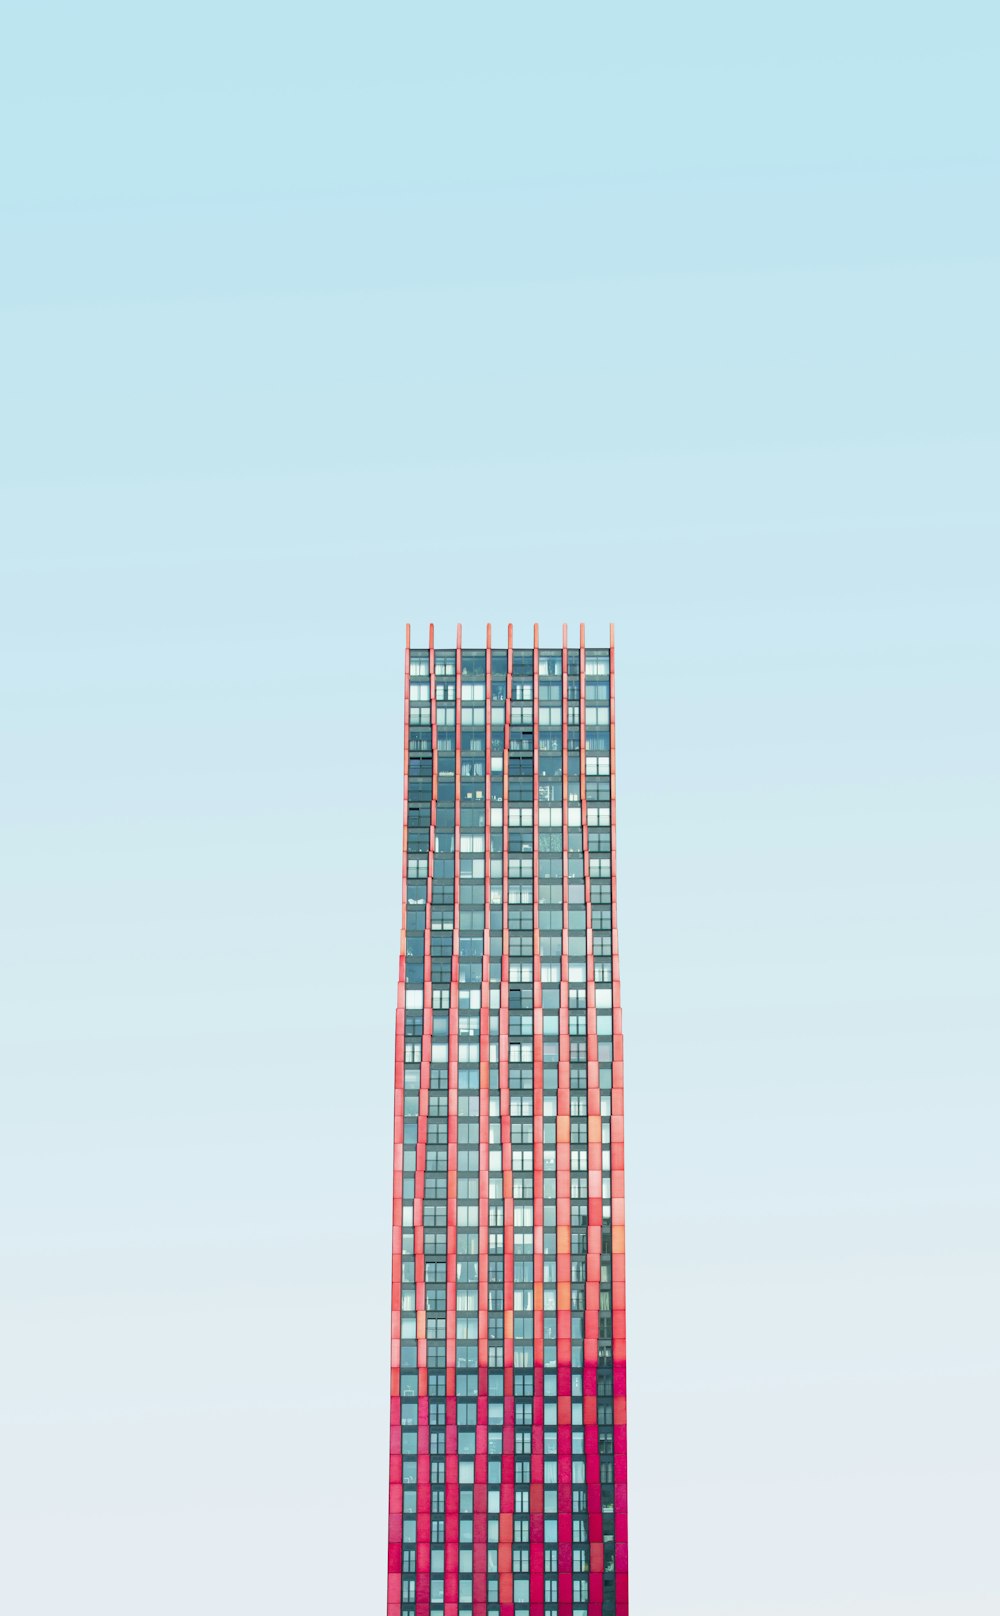 high-rise building under blue skies daytime